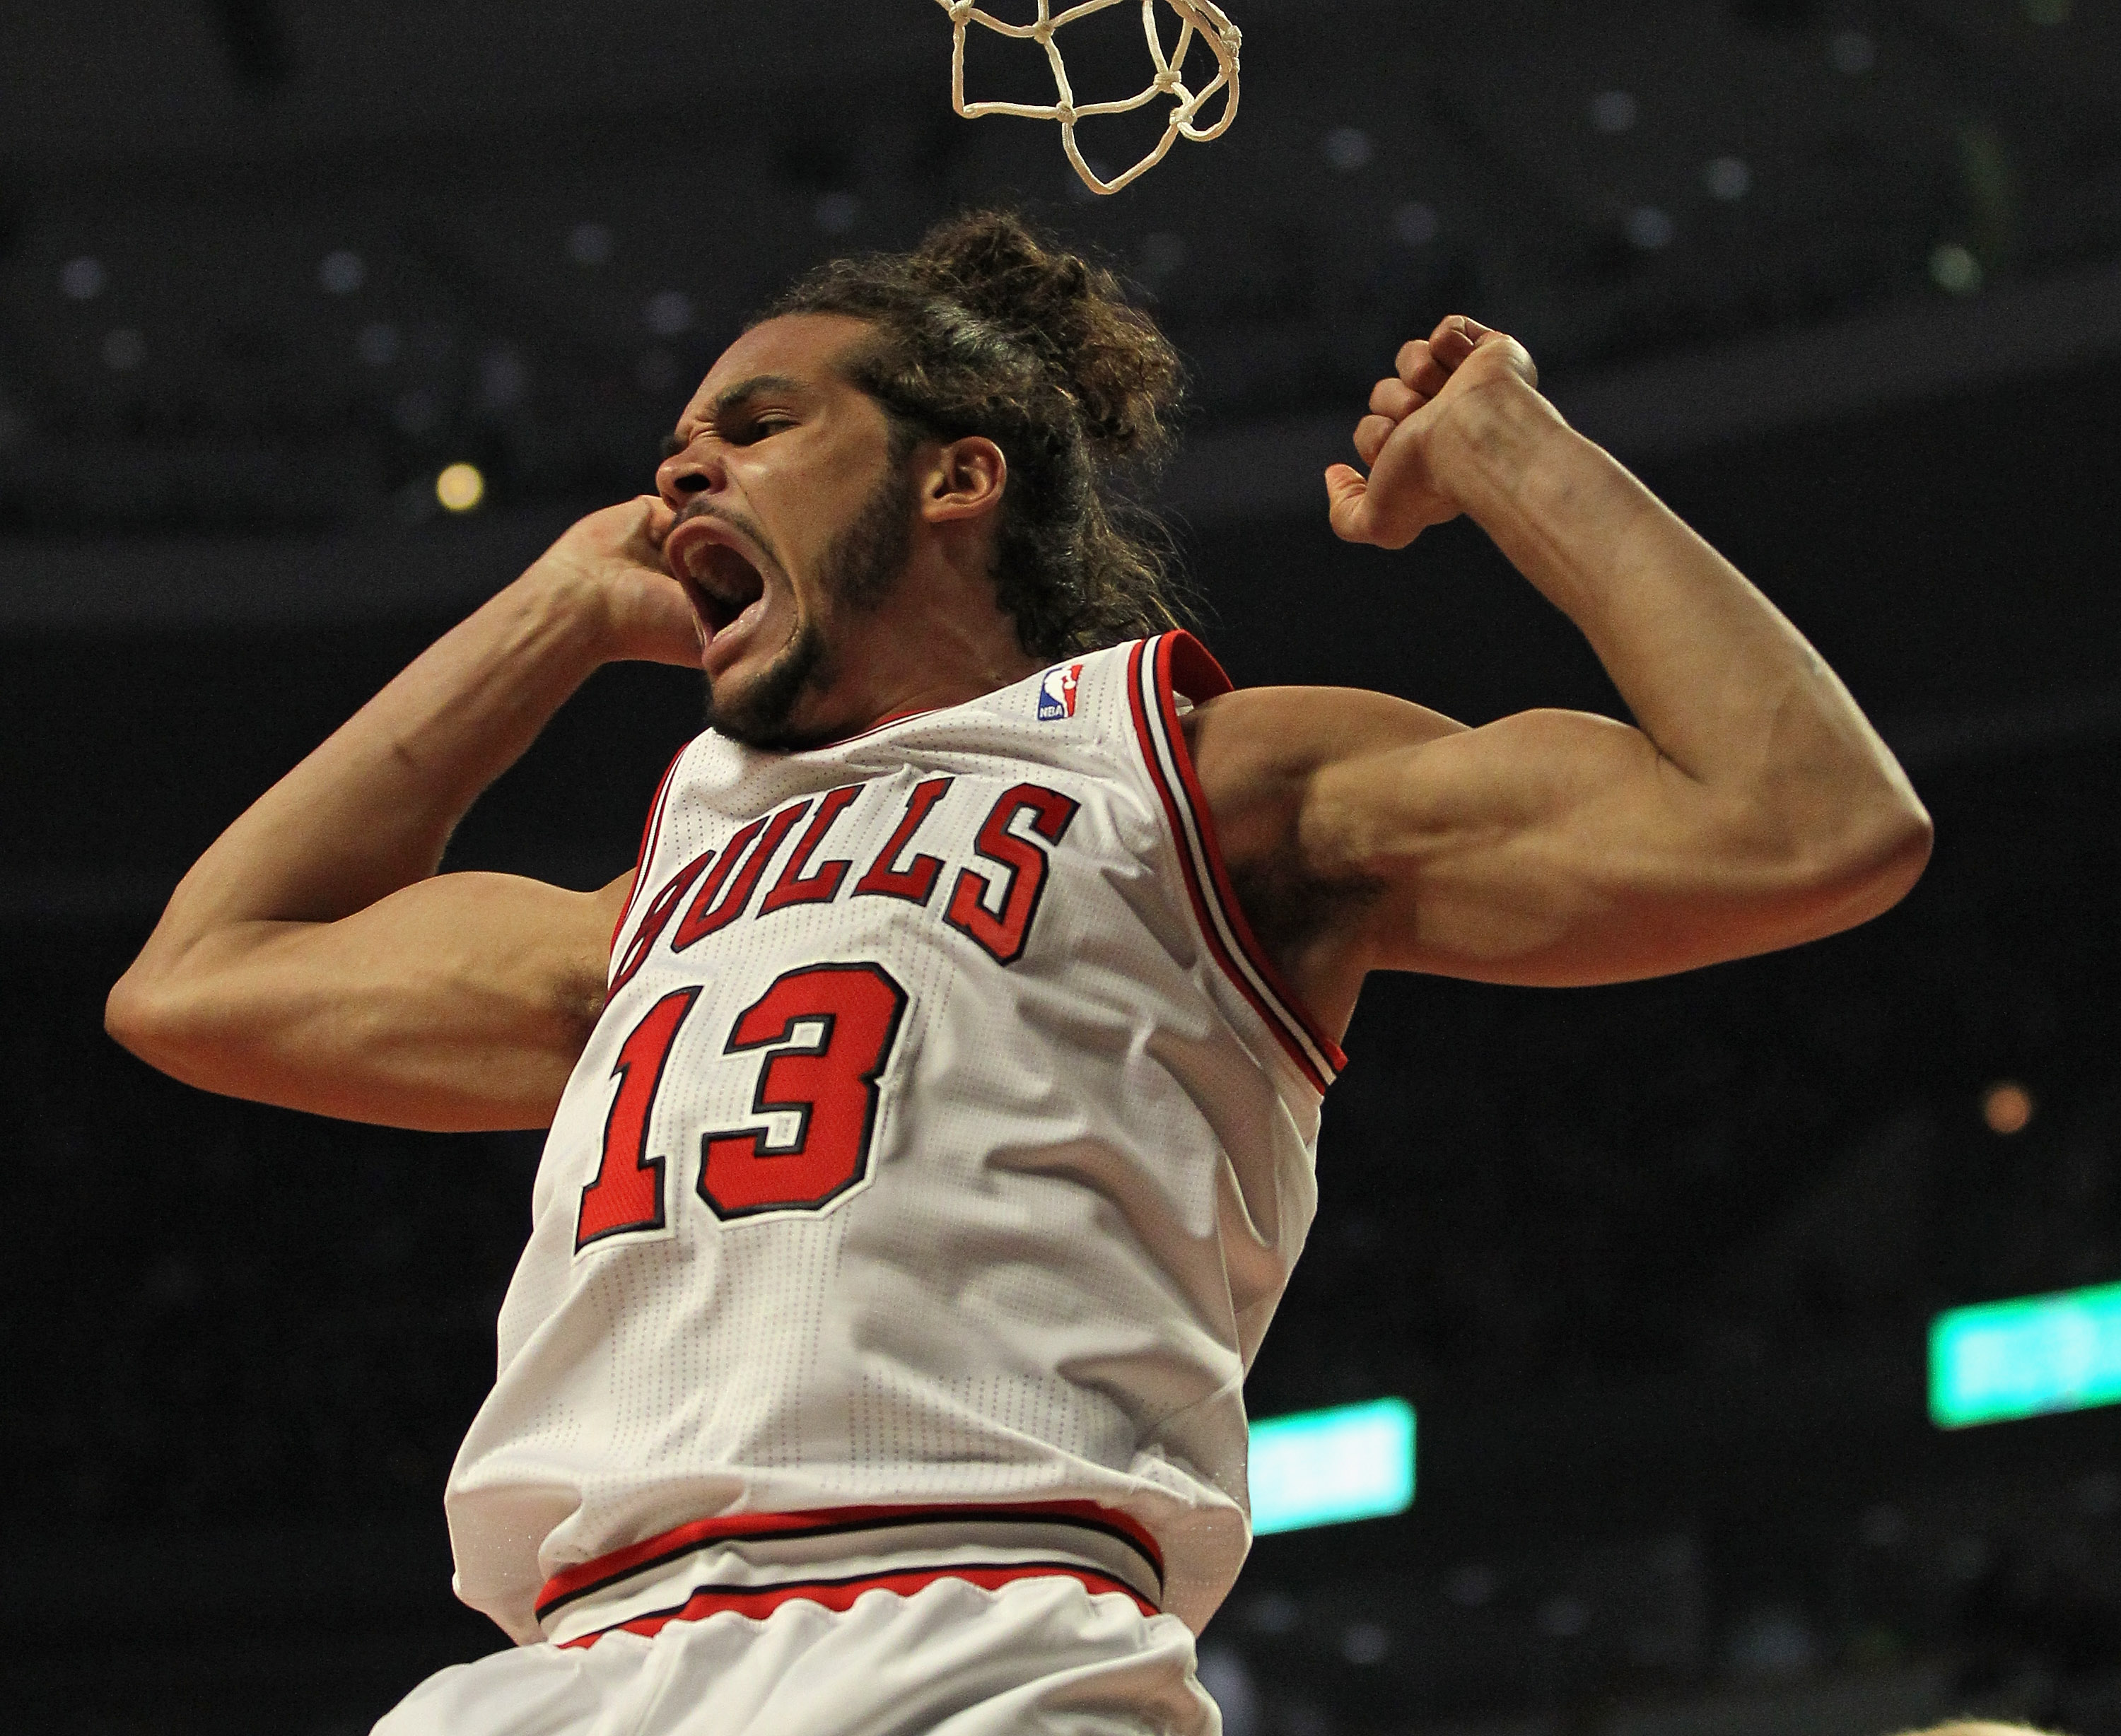 Former Chicago Bulls center Joakim Noah dunks a ball during a game in 2012